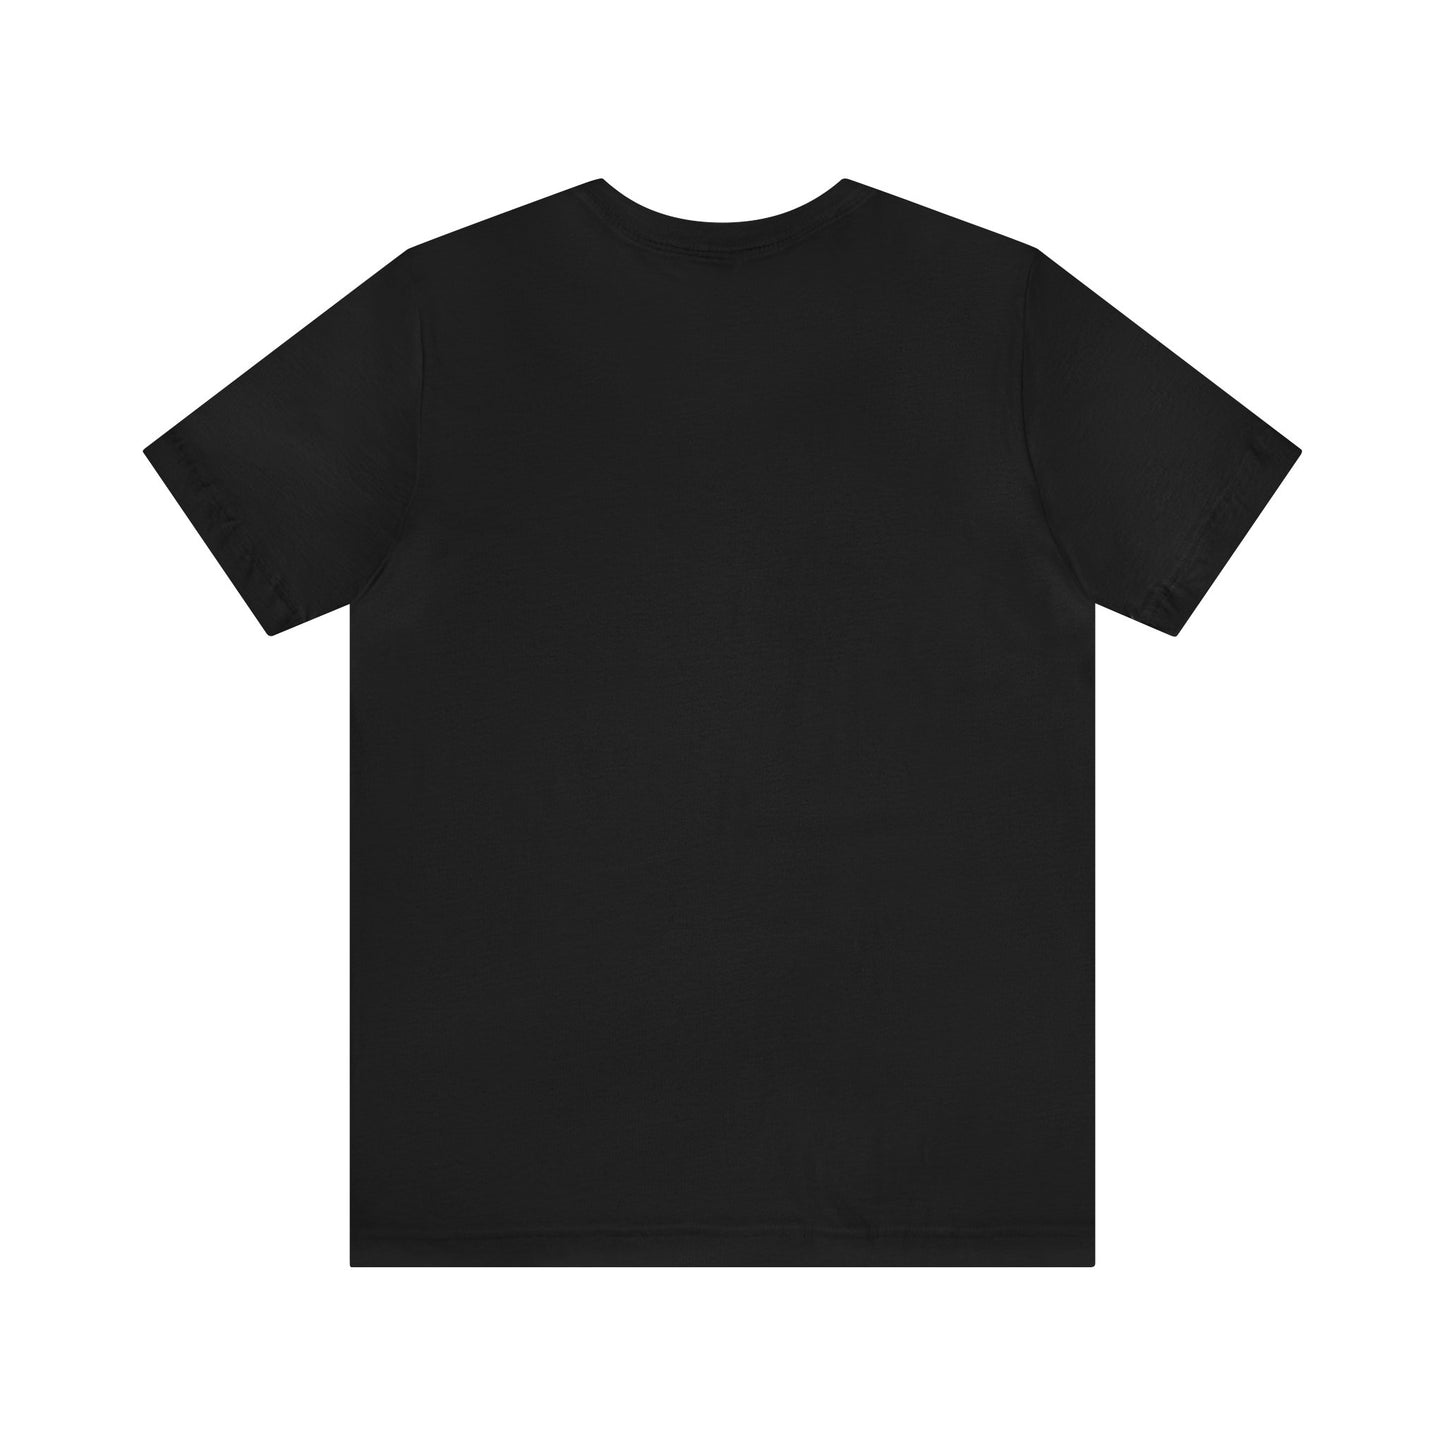 DarkLit Press T-Shirt